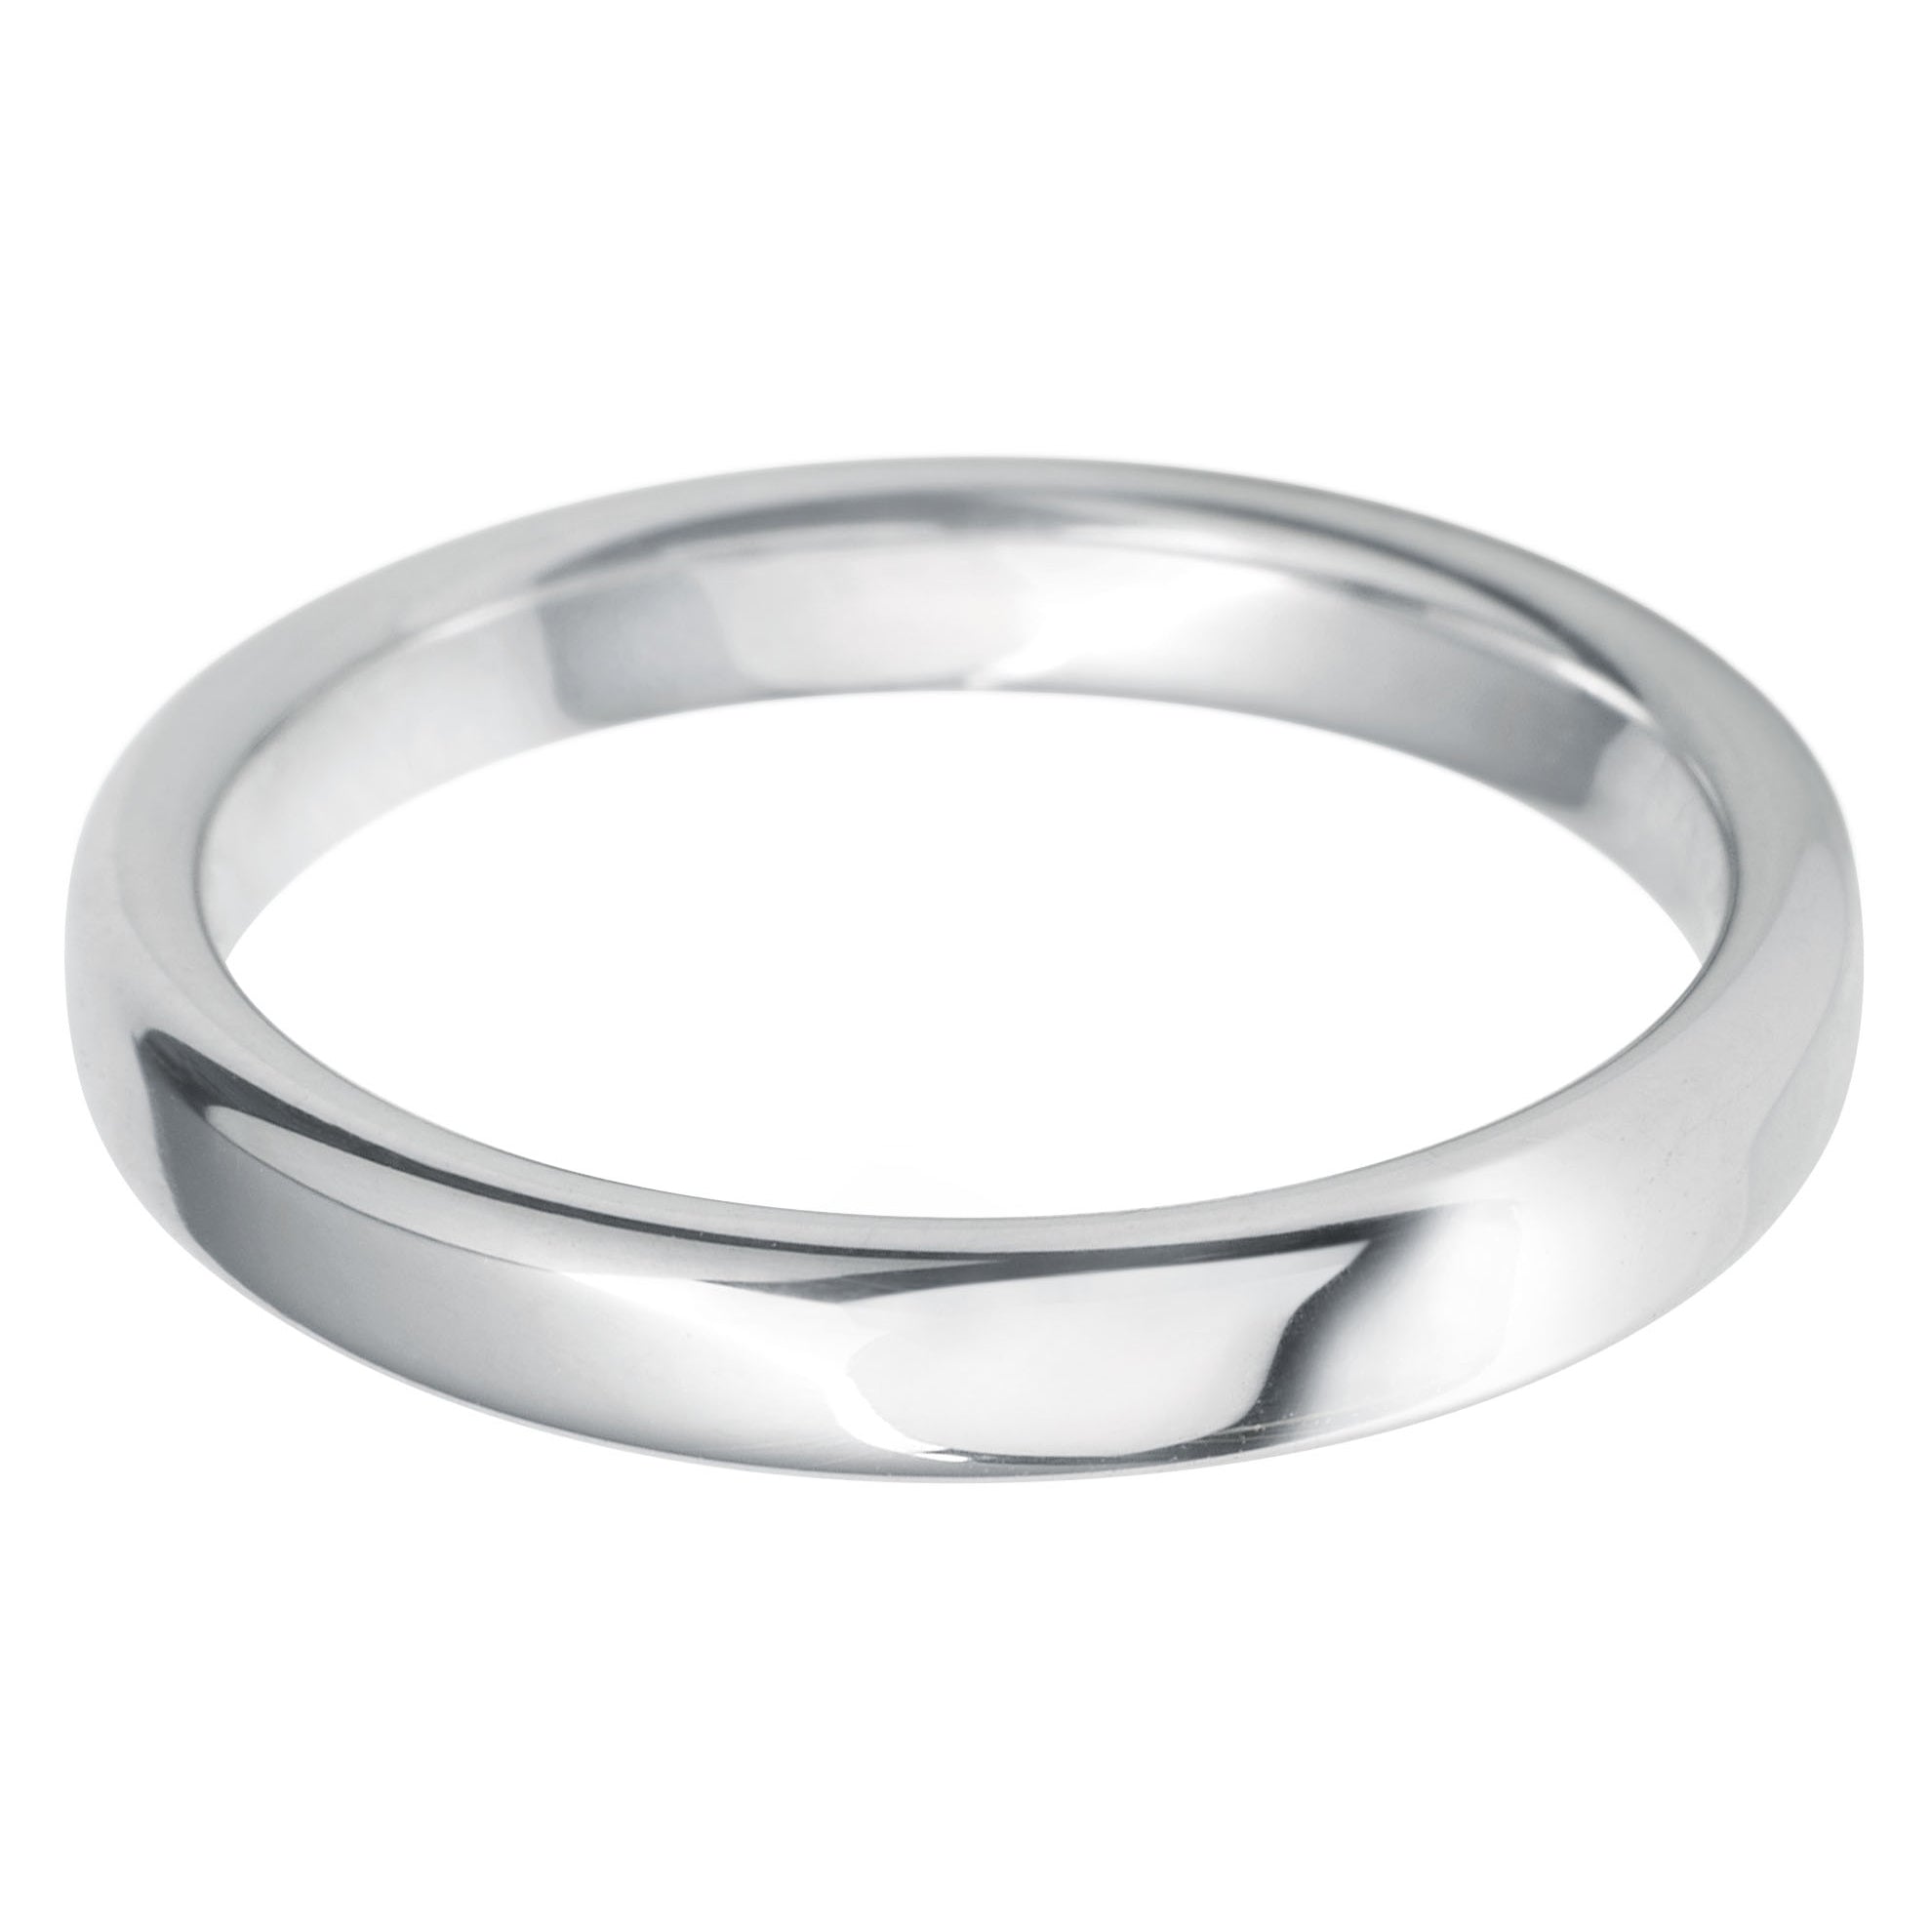 3mm Rounded Flat Medium Weight Wedding Ring